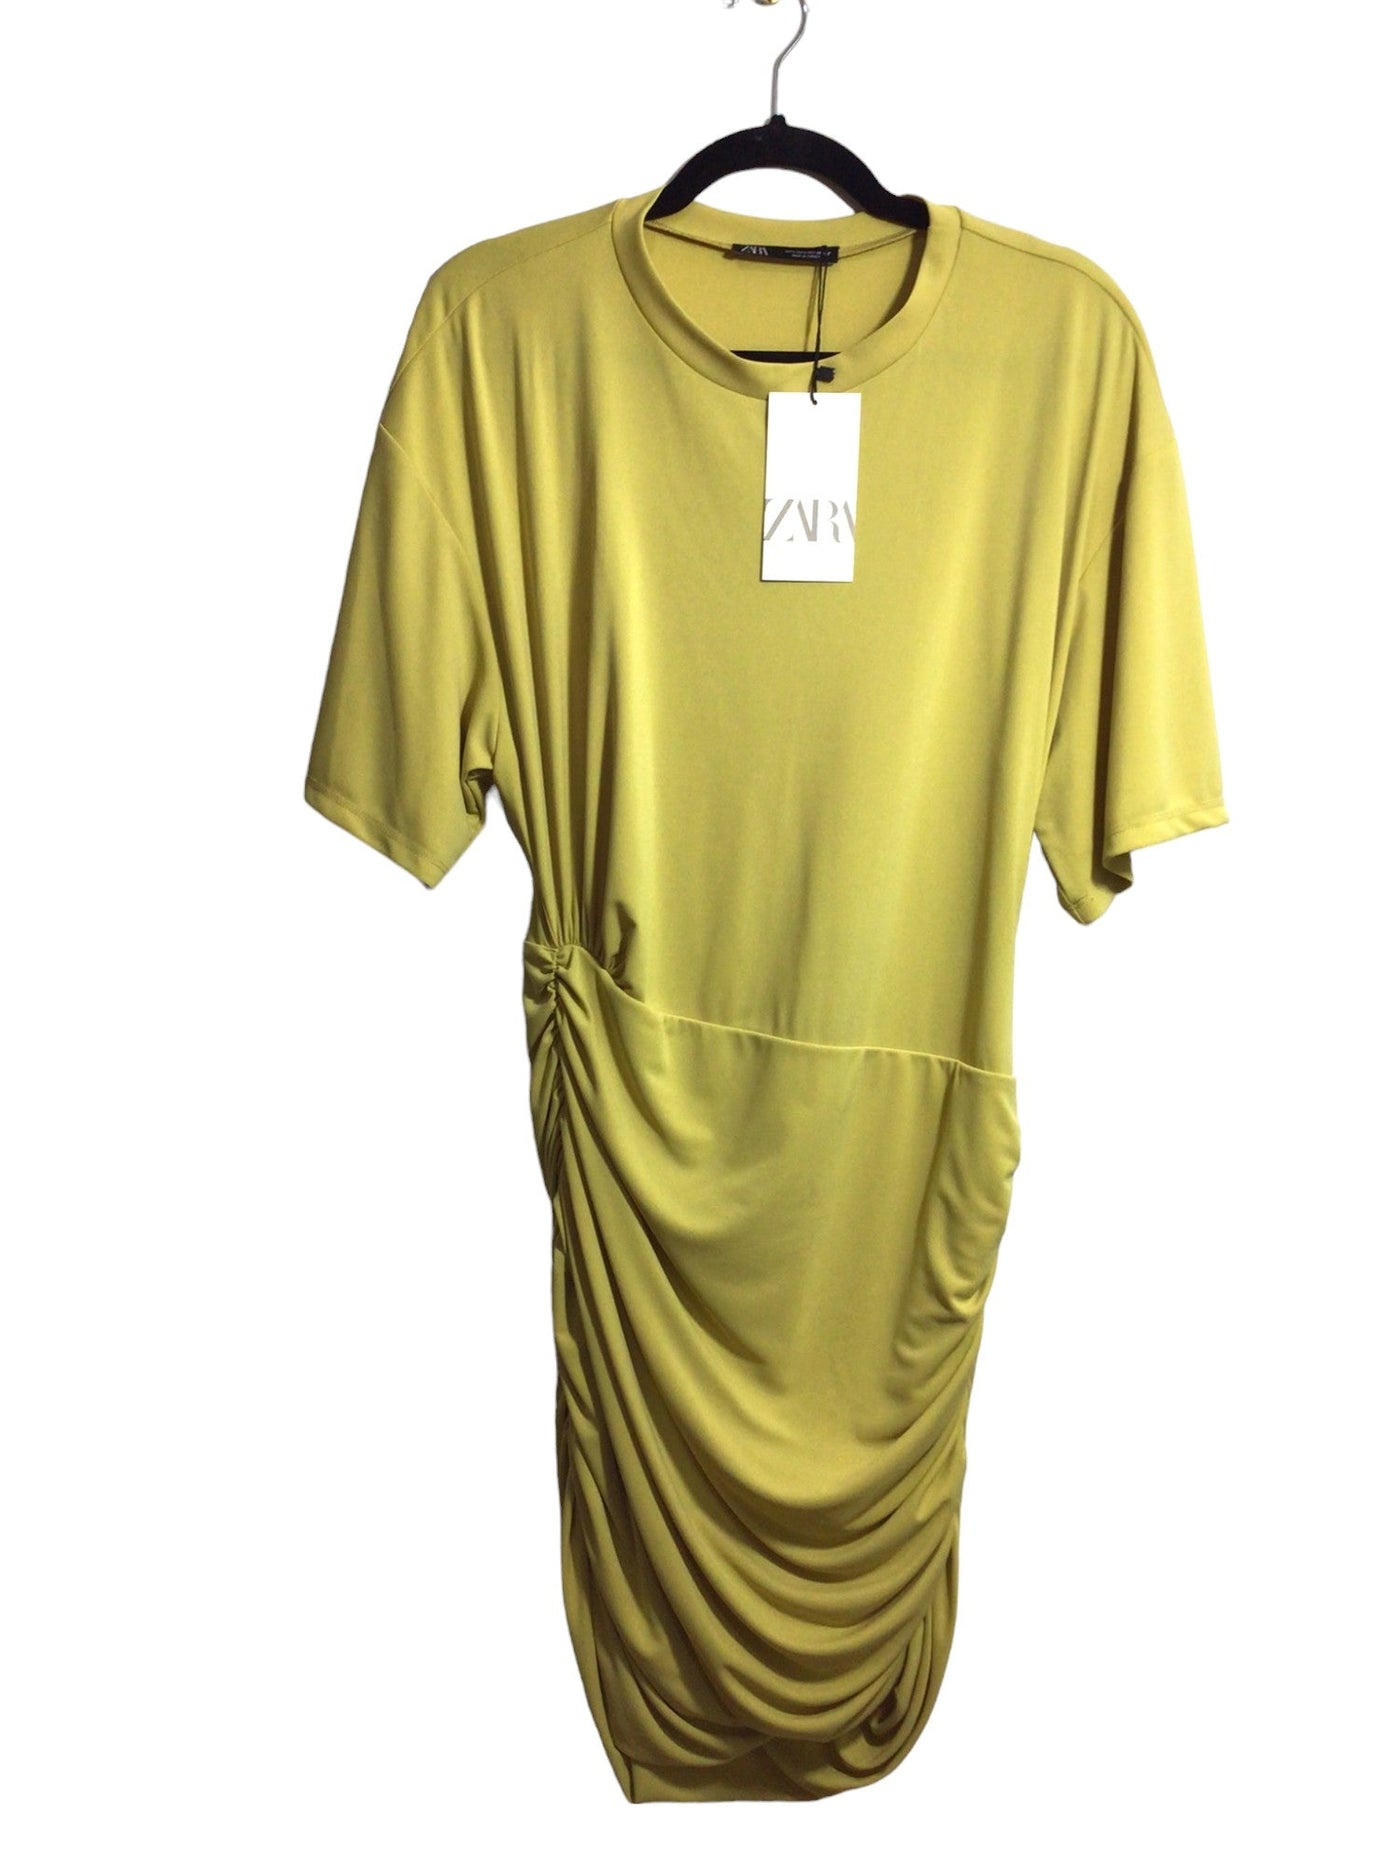 ZARA Women Bodycon Dresses Regular fit in Yellow - Size L | 19.3 $ KOOP